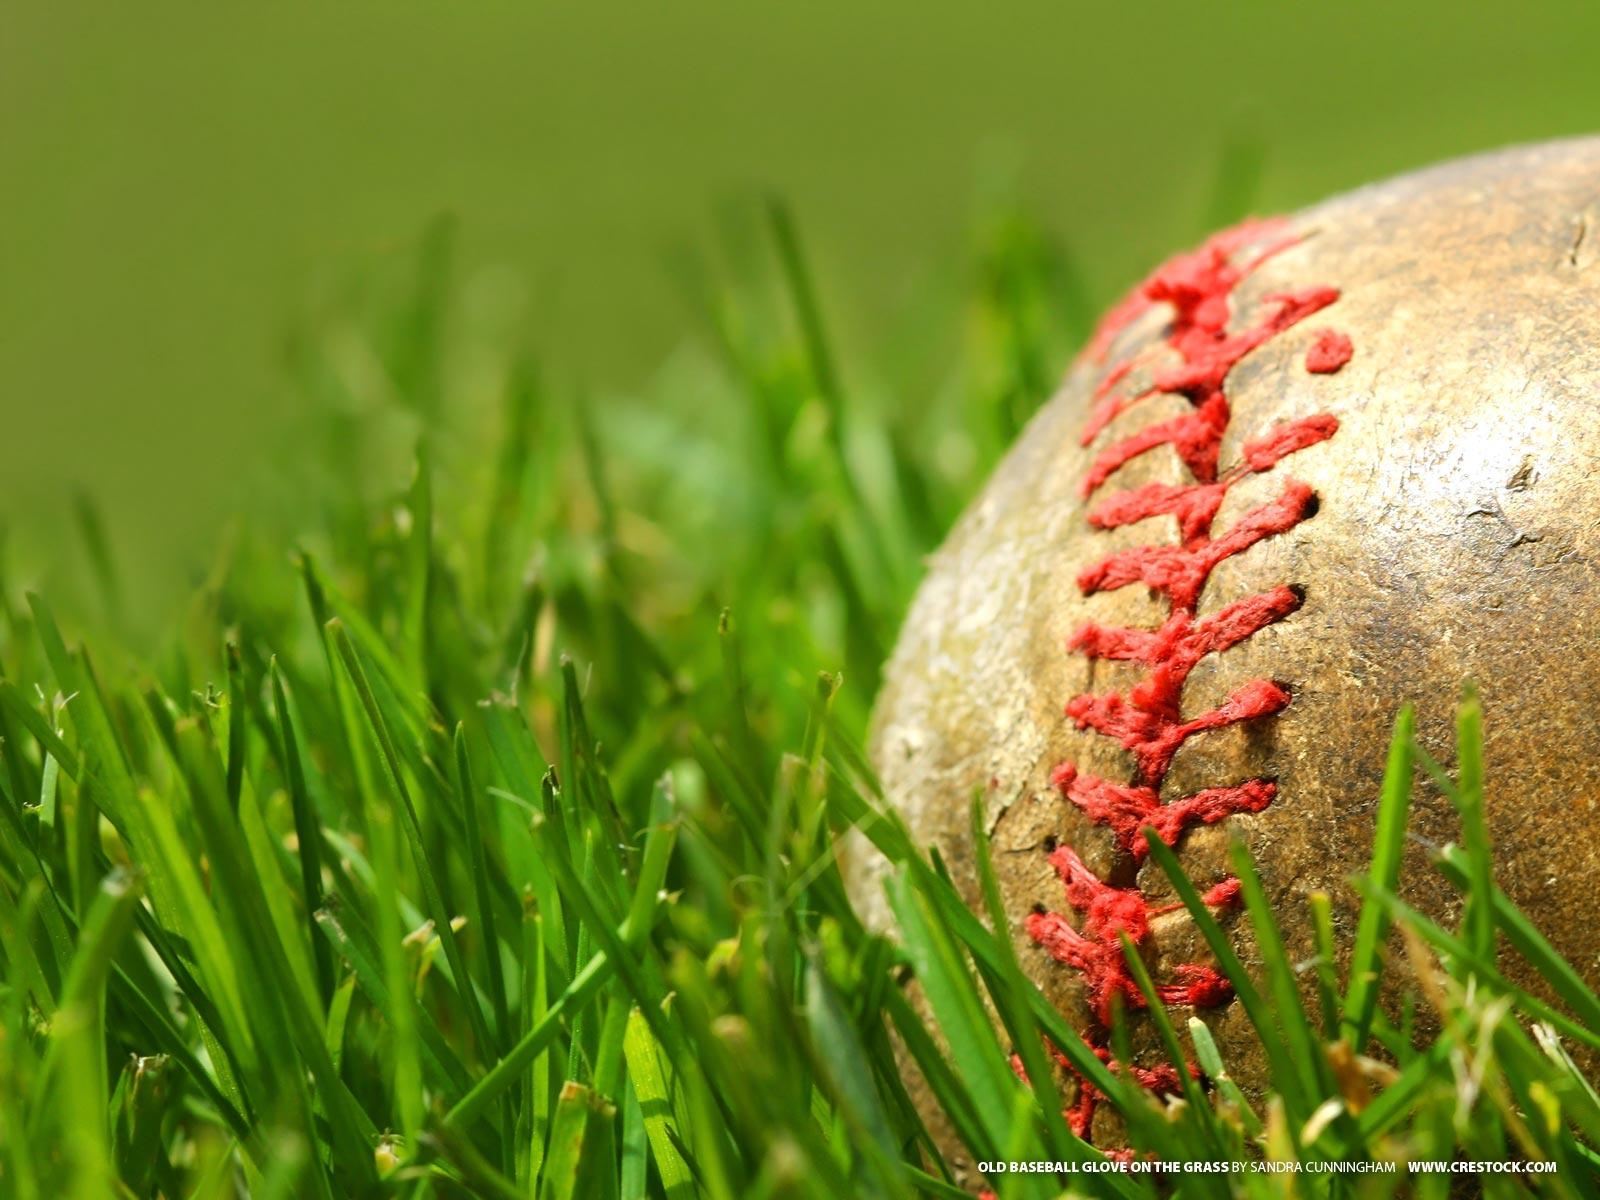 Cool Free HD baseball desktop wallpaper image and background. HD